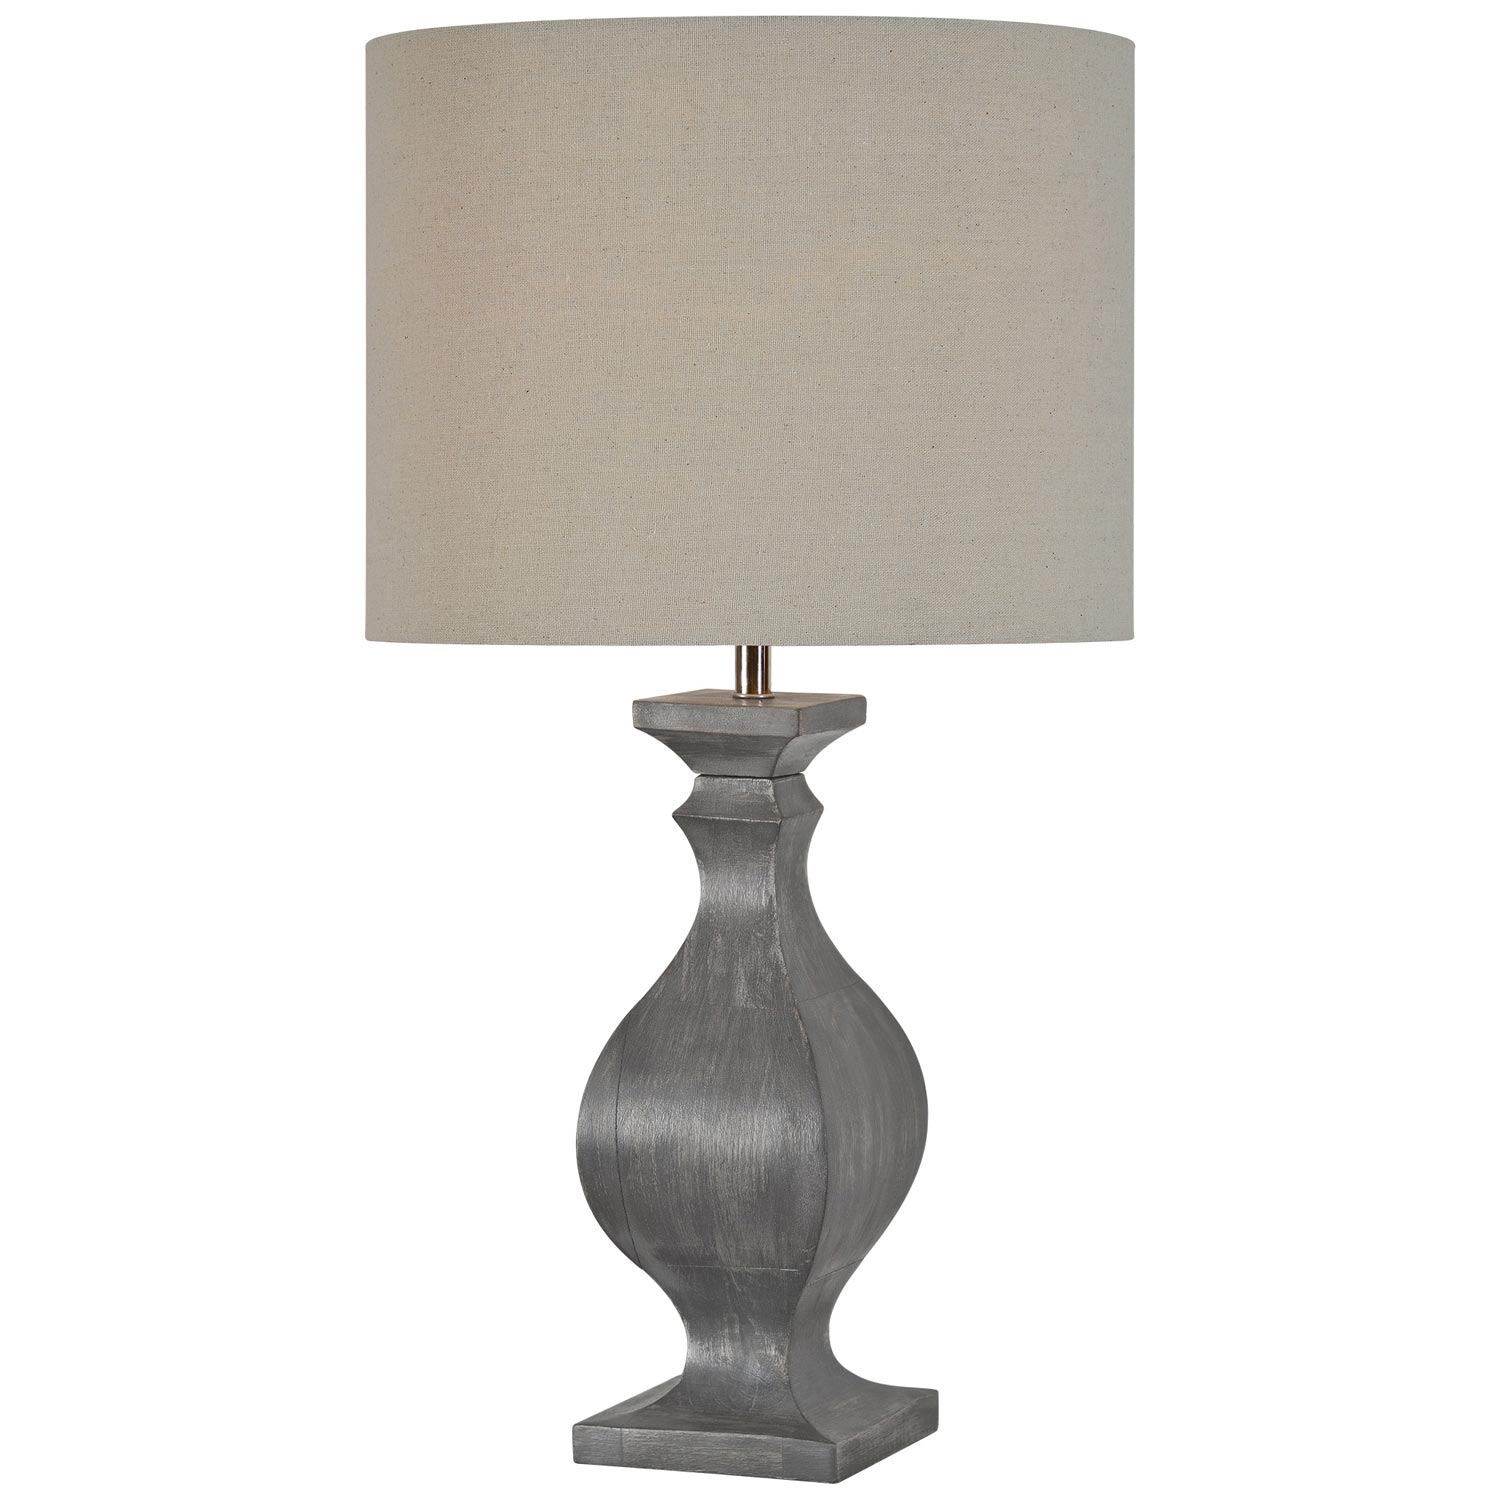 Ren-Wil Durango Table Lamp - Grey Wash